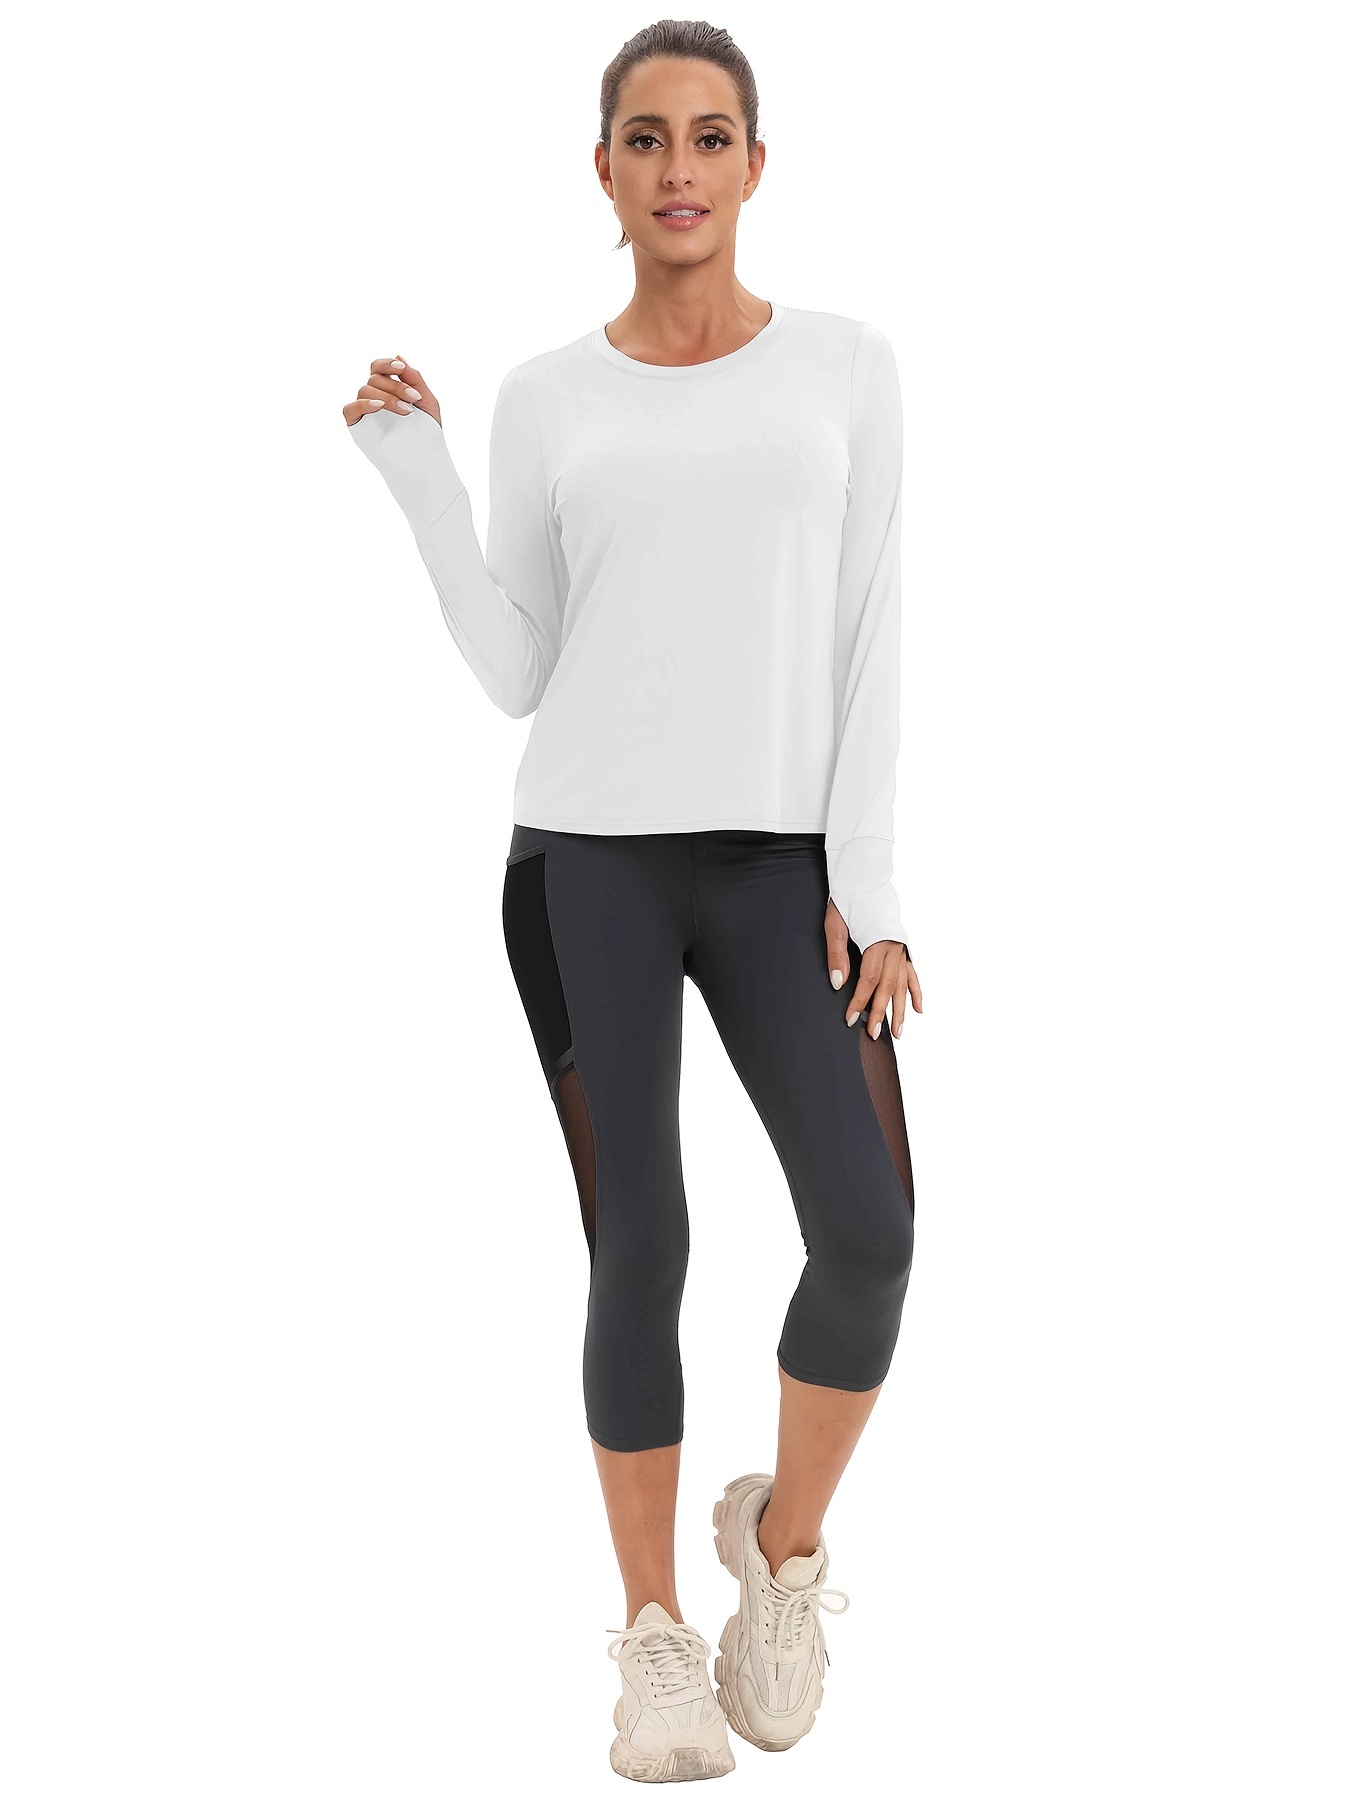 Sport T Shirt Black Modal Yoga Shirts Sexy Back Mesh Long Sleeve Women Gym Workout  Tops Loose U Neck Breathable Fitness Clothing